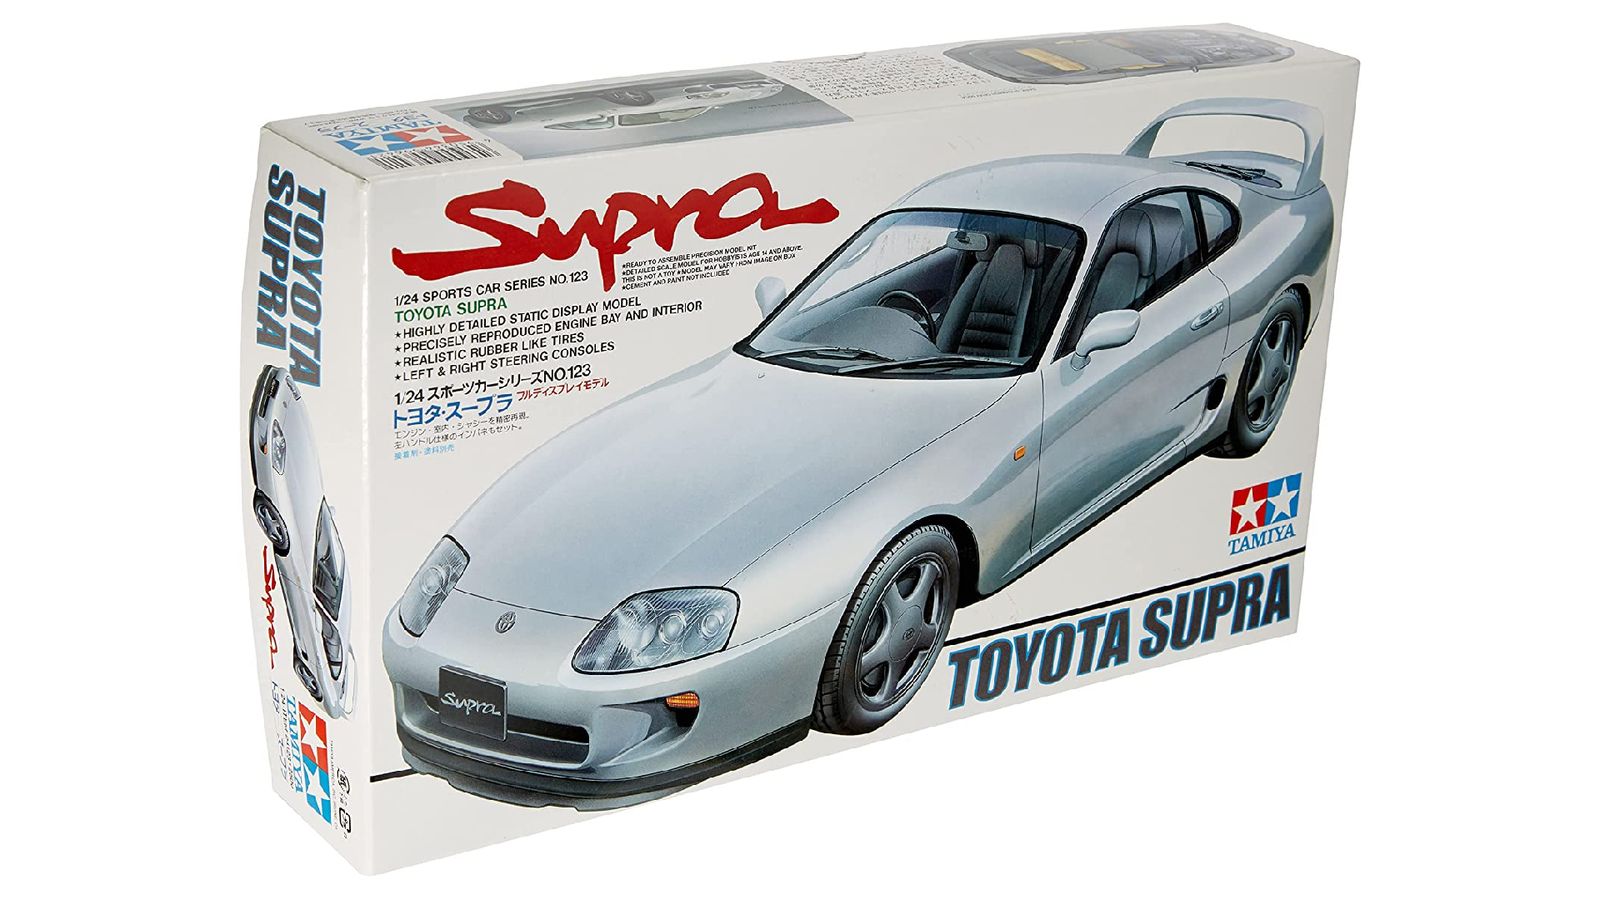 Toyota Supra product image of a silver Toyota Supra model in a box.